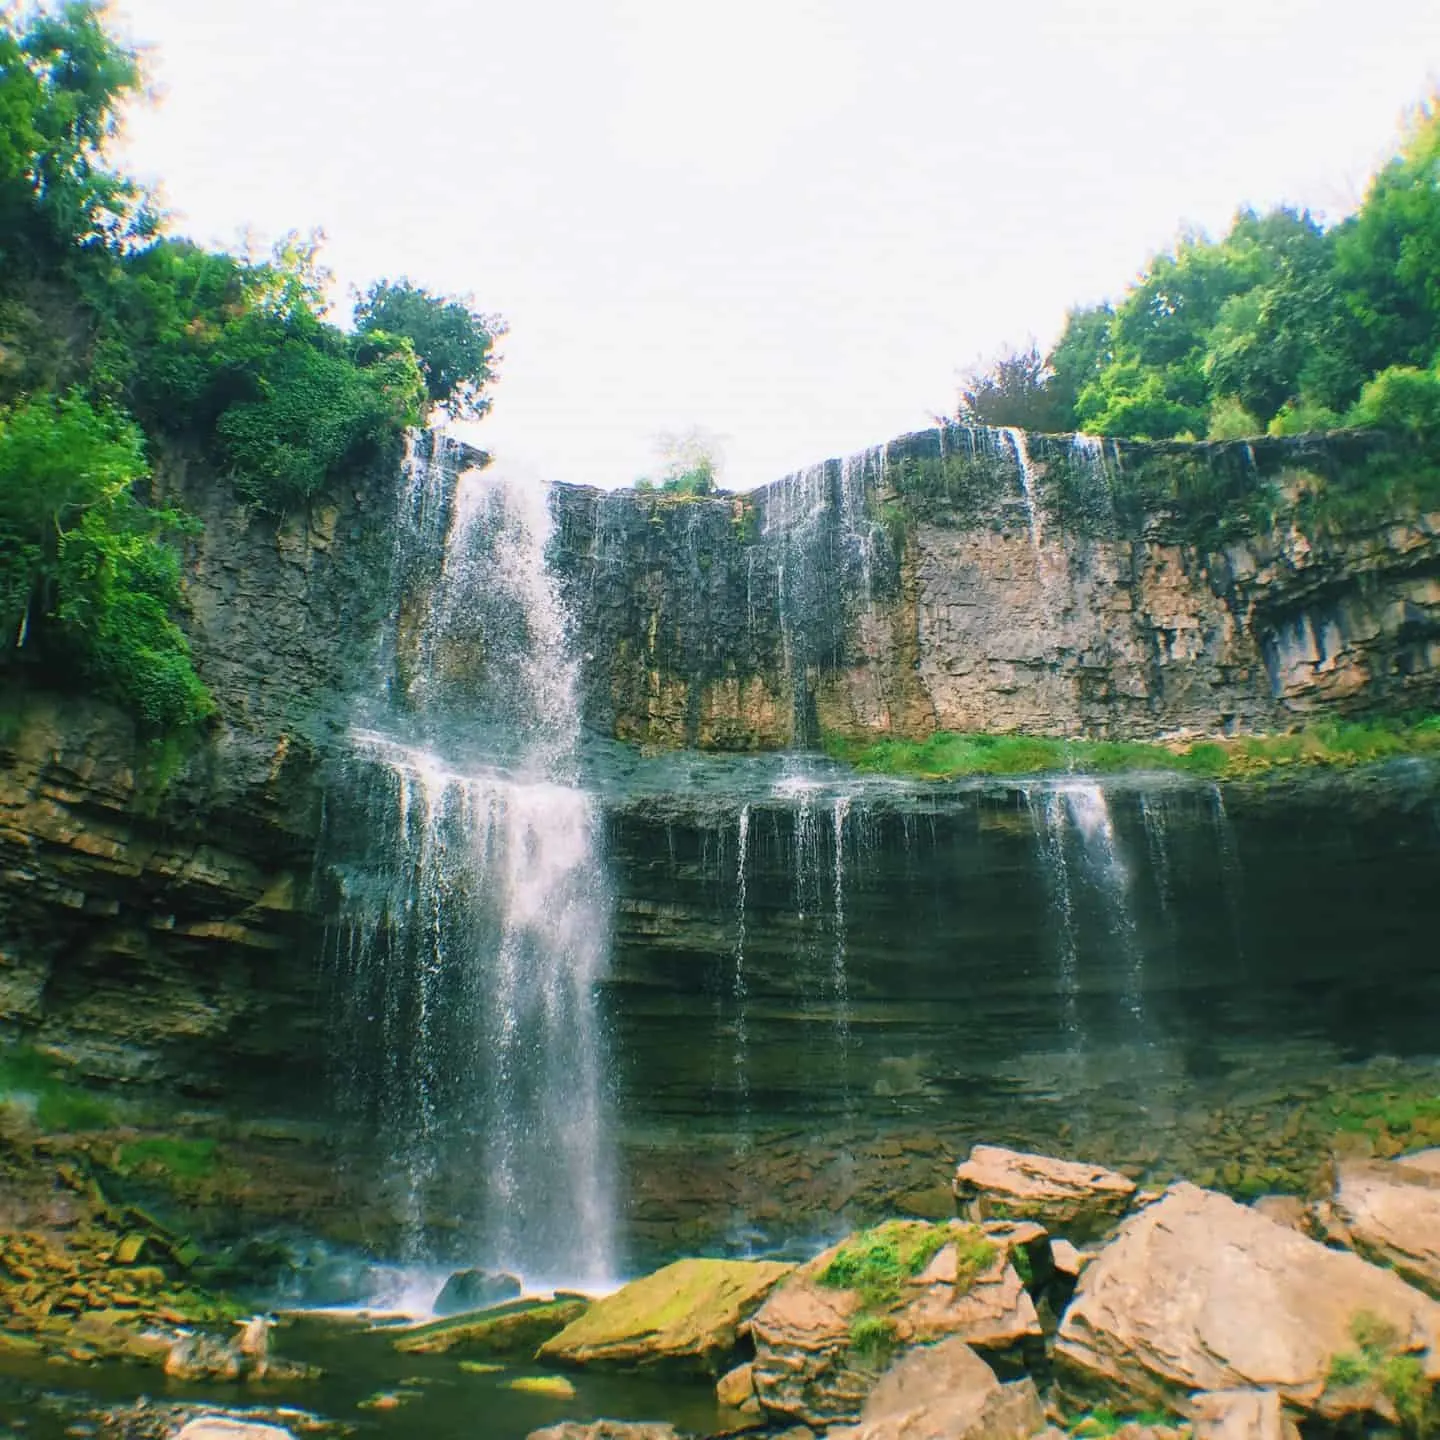 Webster Falls in Hamilton, Ontario